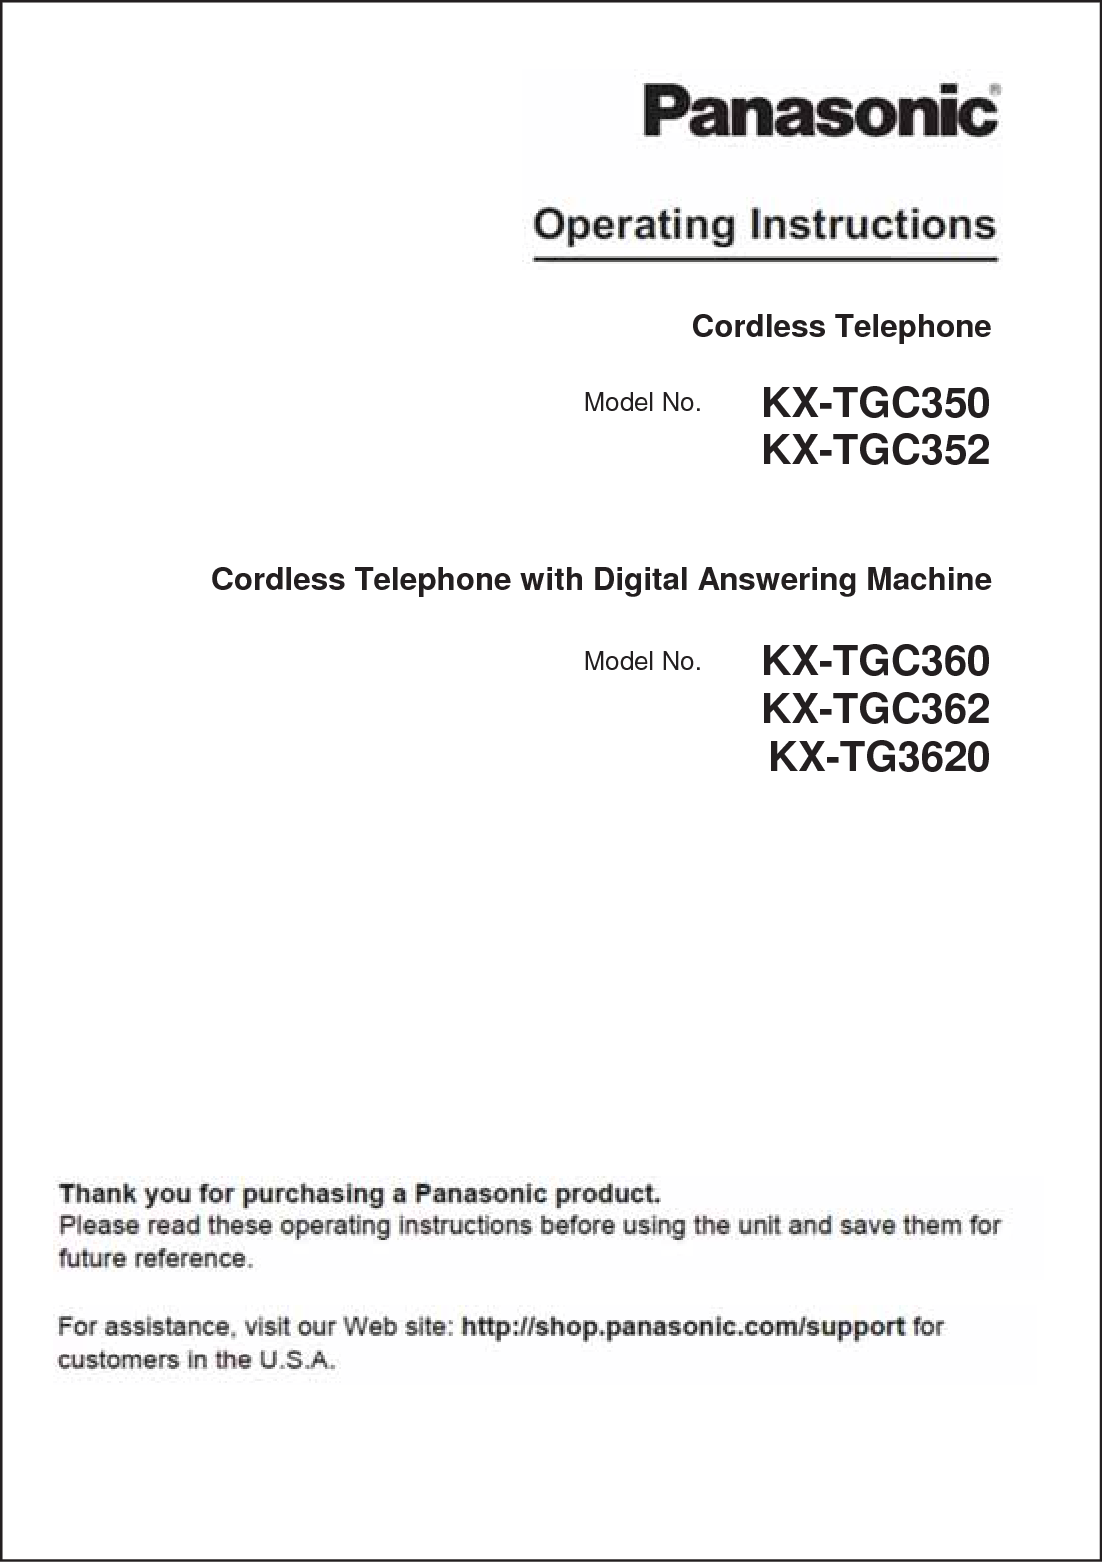 Cordless TelephoneModel No. KX-TGC350KX-TGC352Cordless Telephone with Digital Answering MachineModel No. KX-TGC360KX-TGC362KX-TG3620